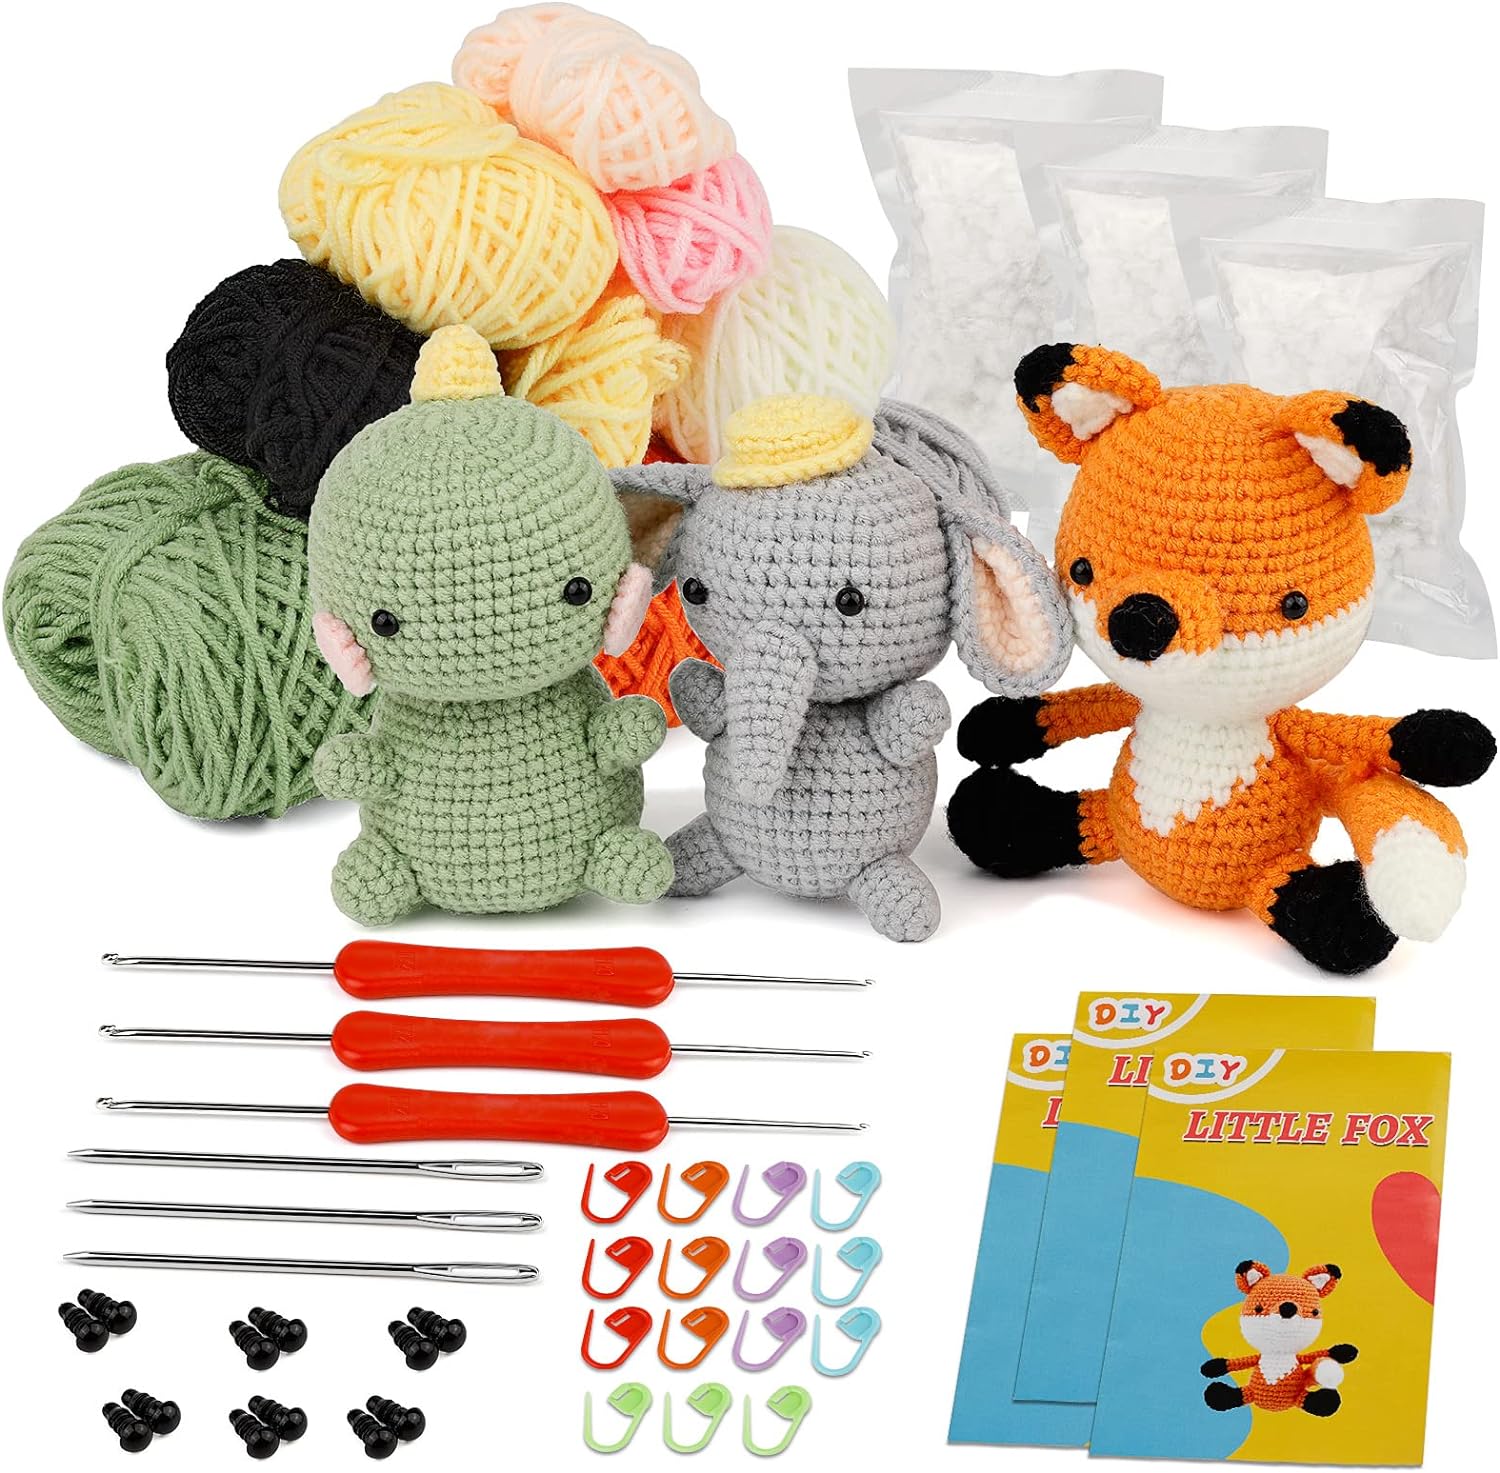 Disney Princesses & Villains: Crochet Finger Puppets (Crochet Kits